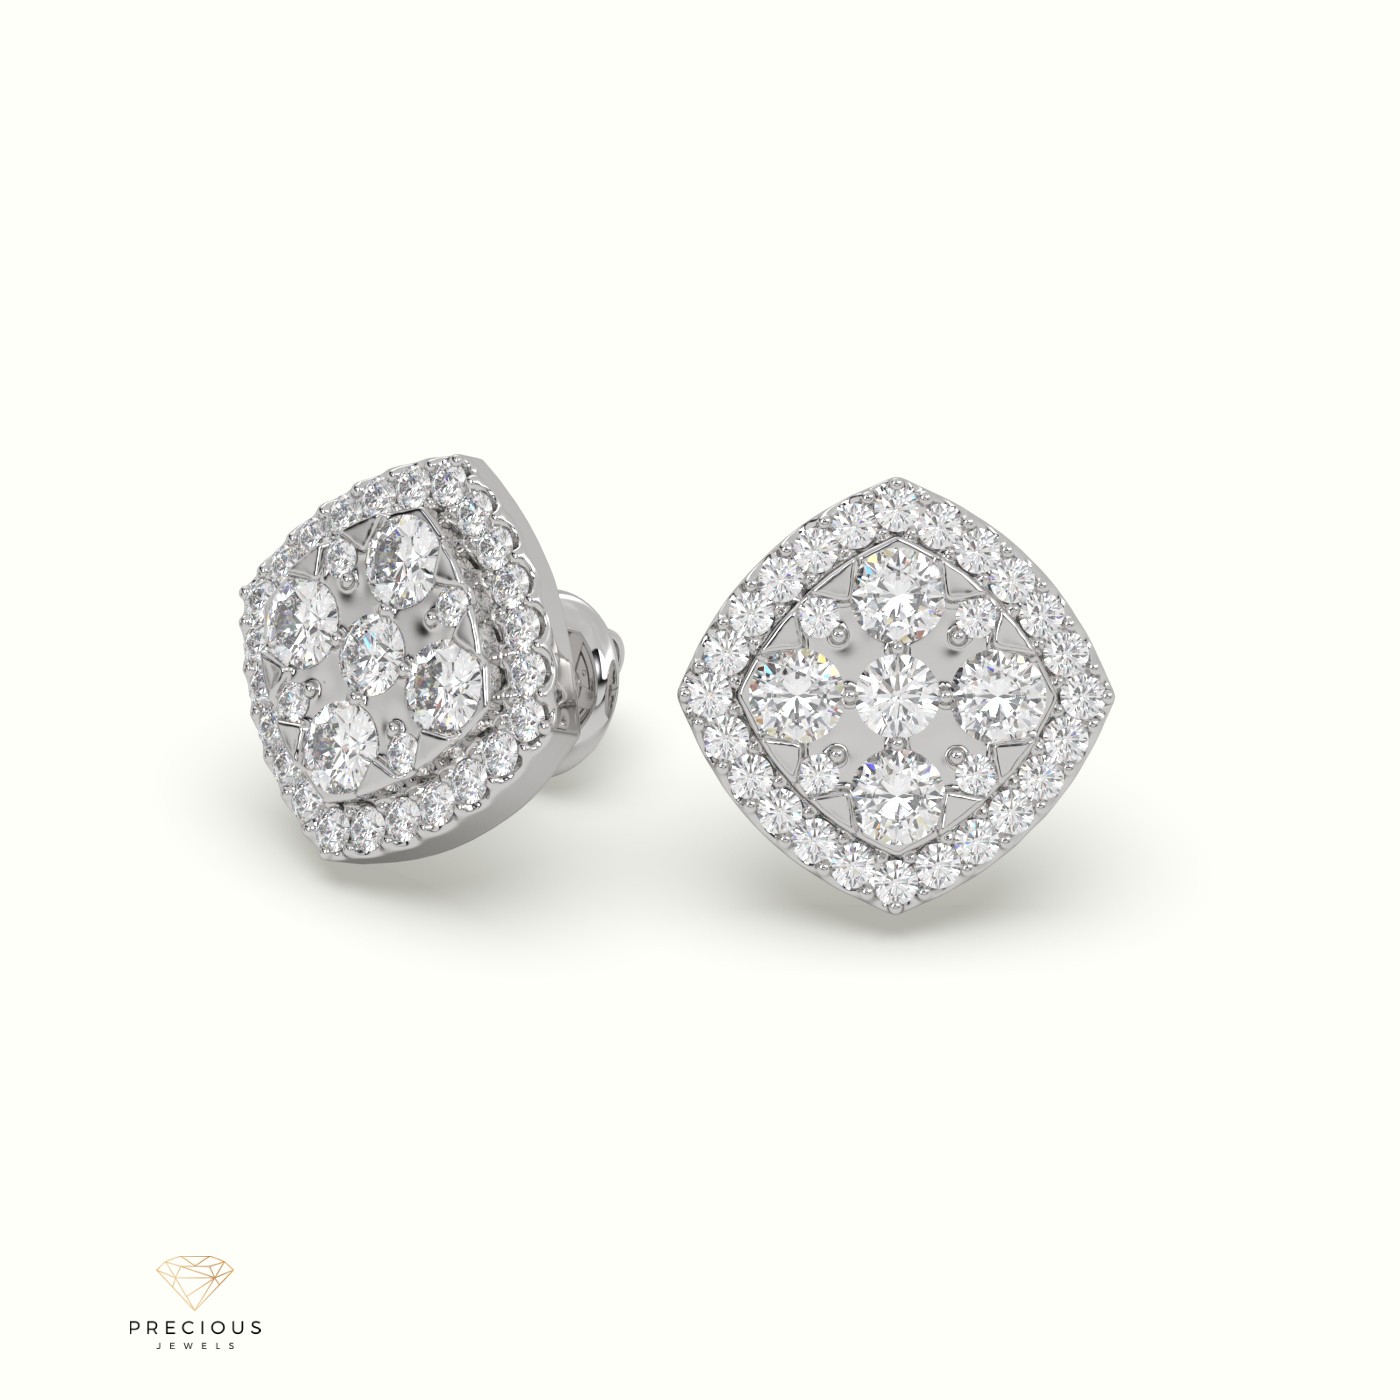 18k white gold rounded square diamond cluster earrings